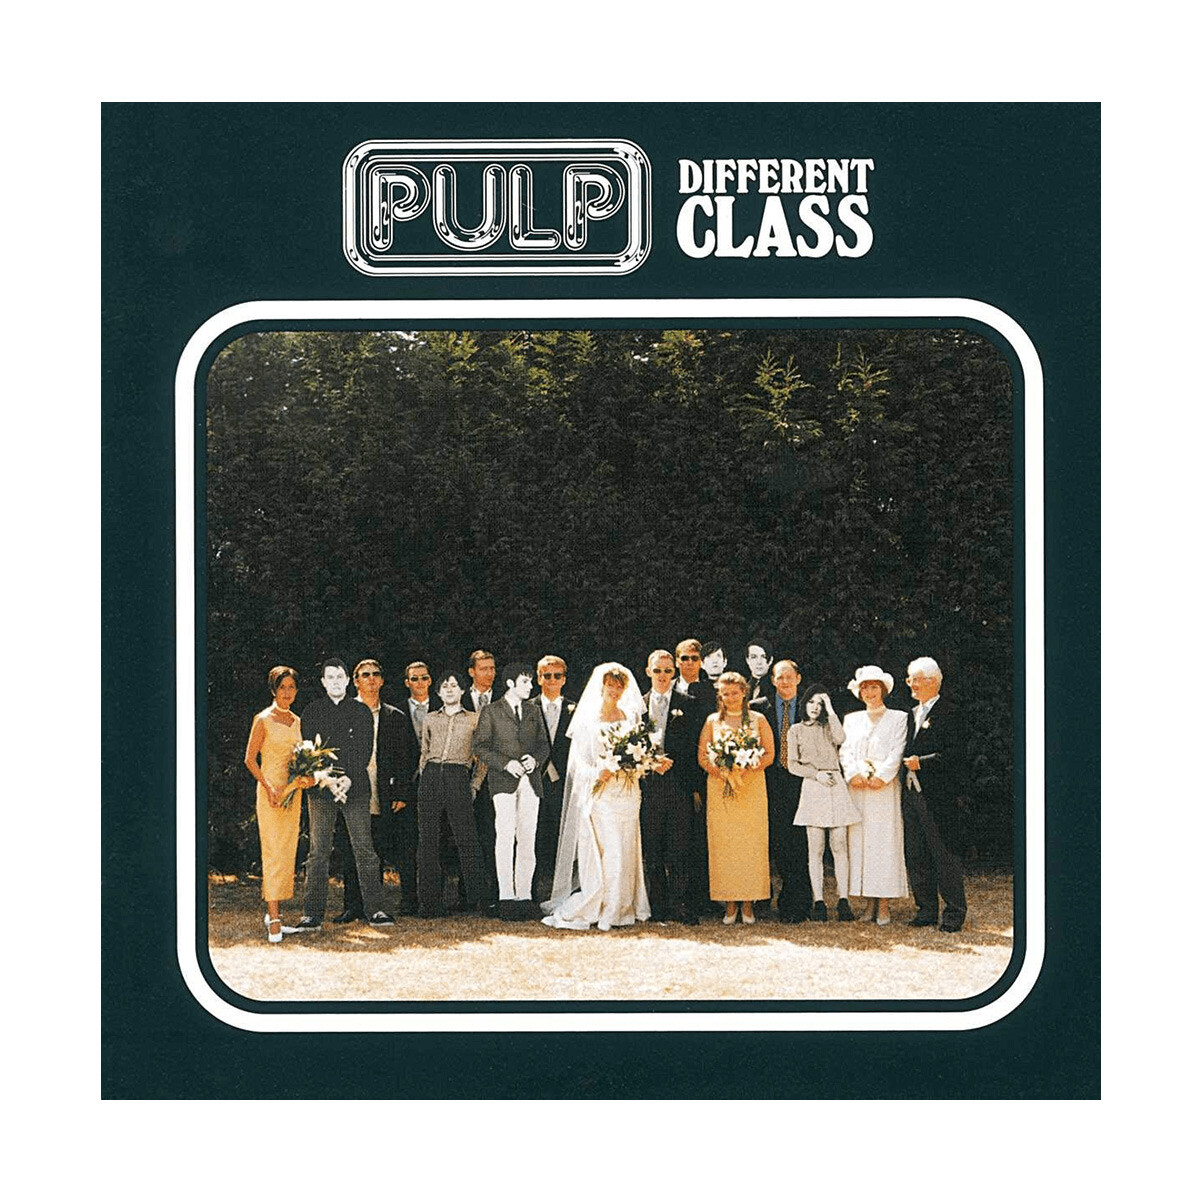 Pulp - Different Class 